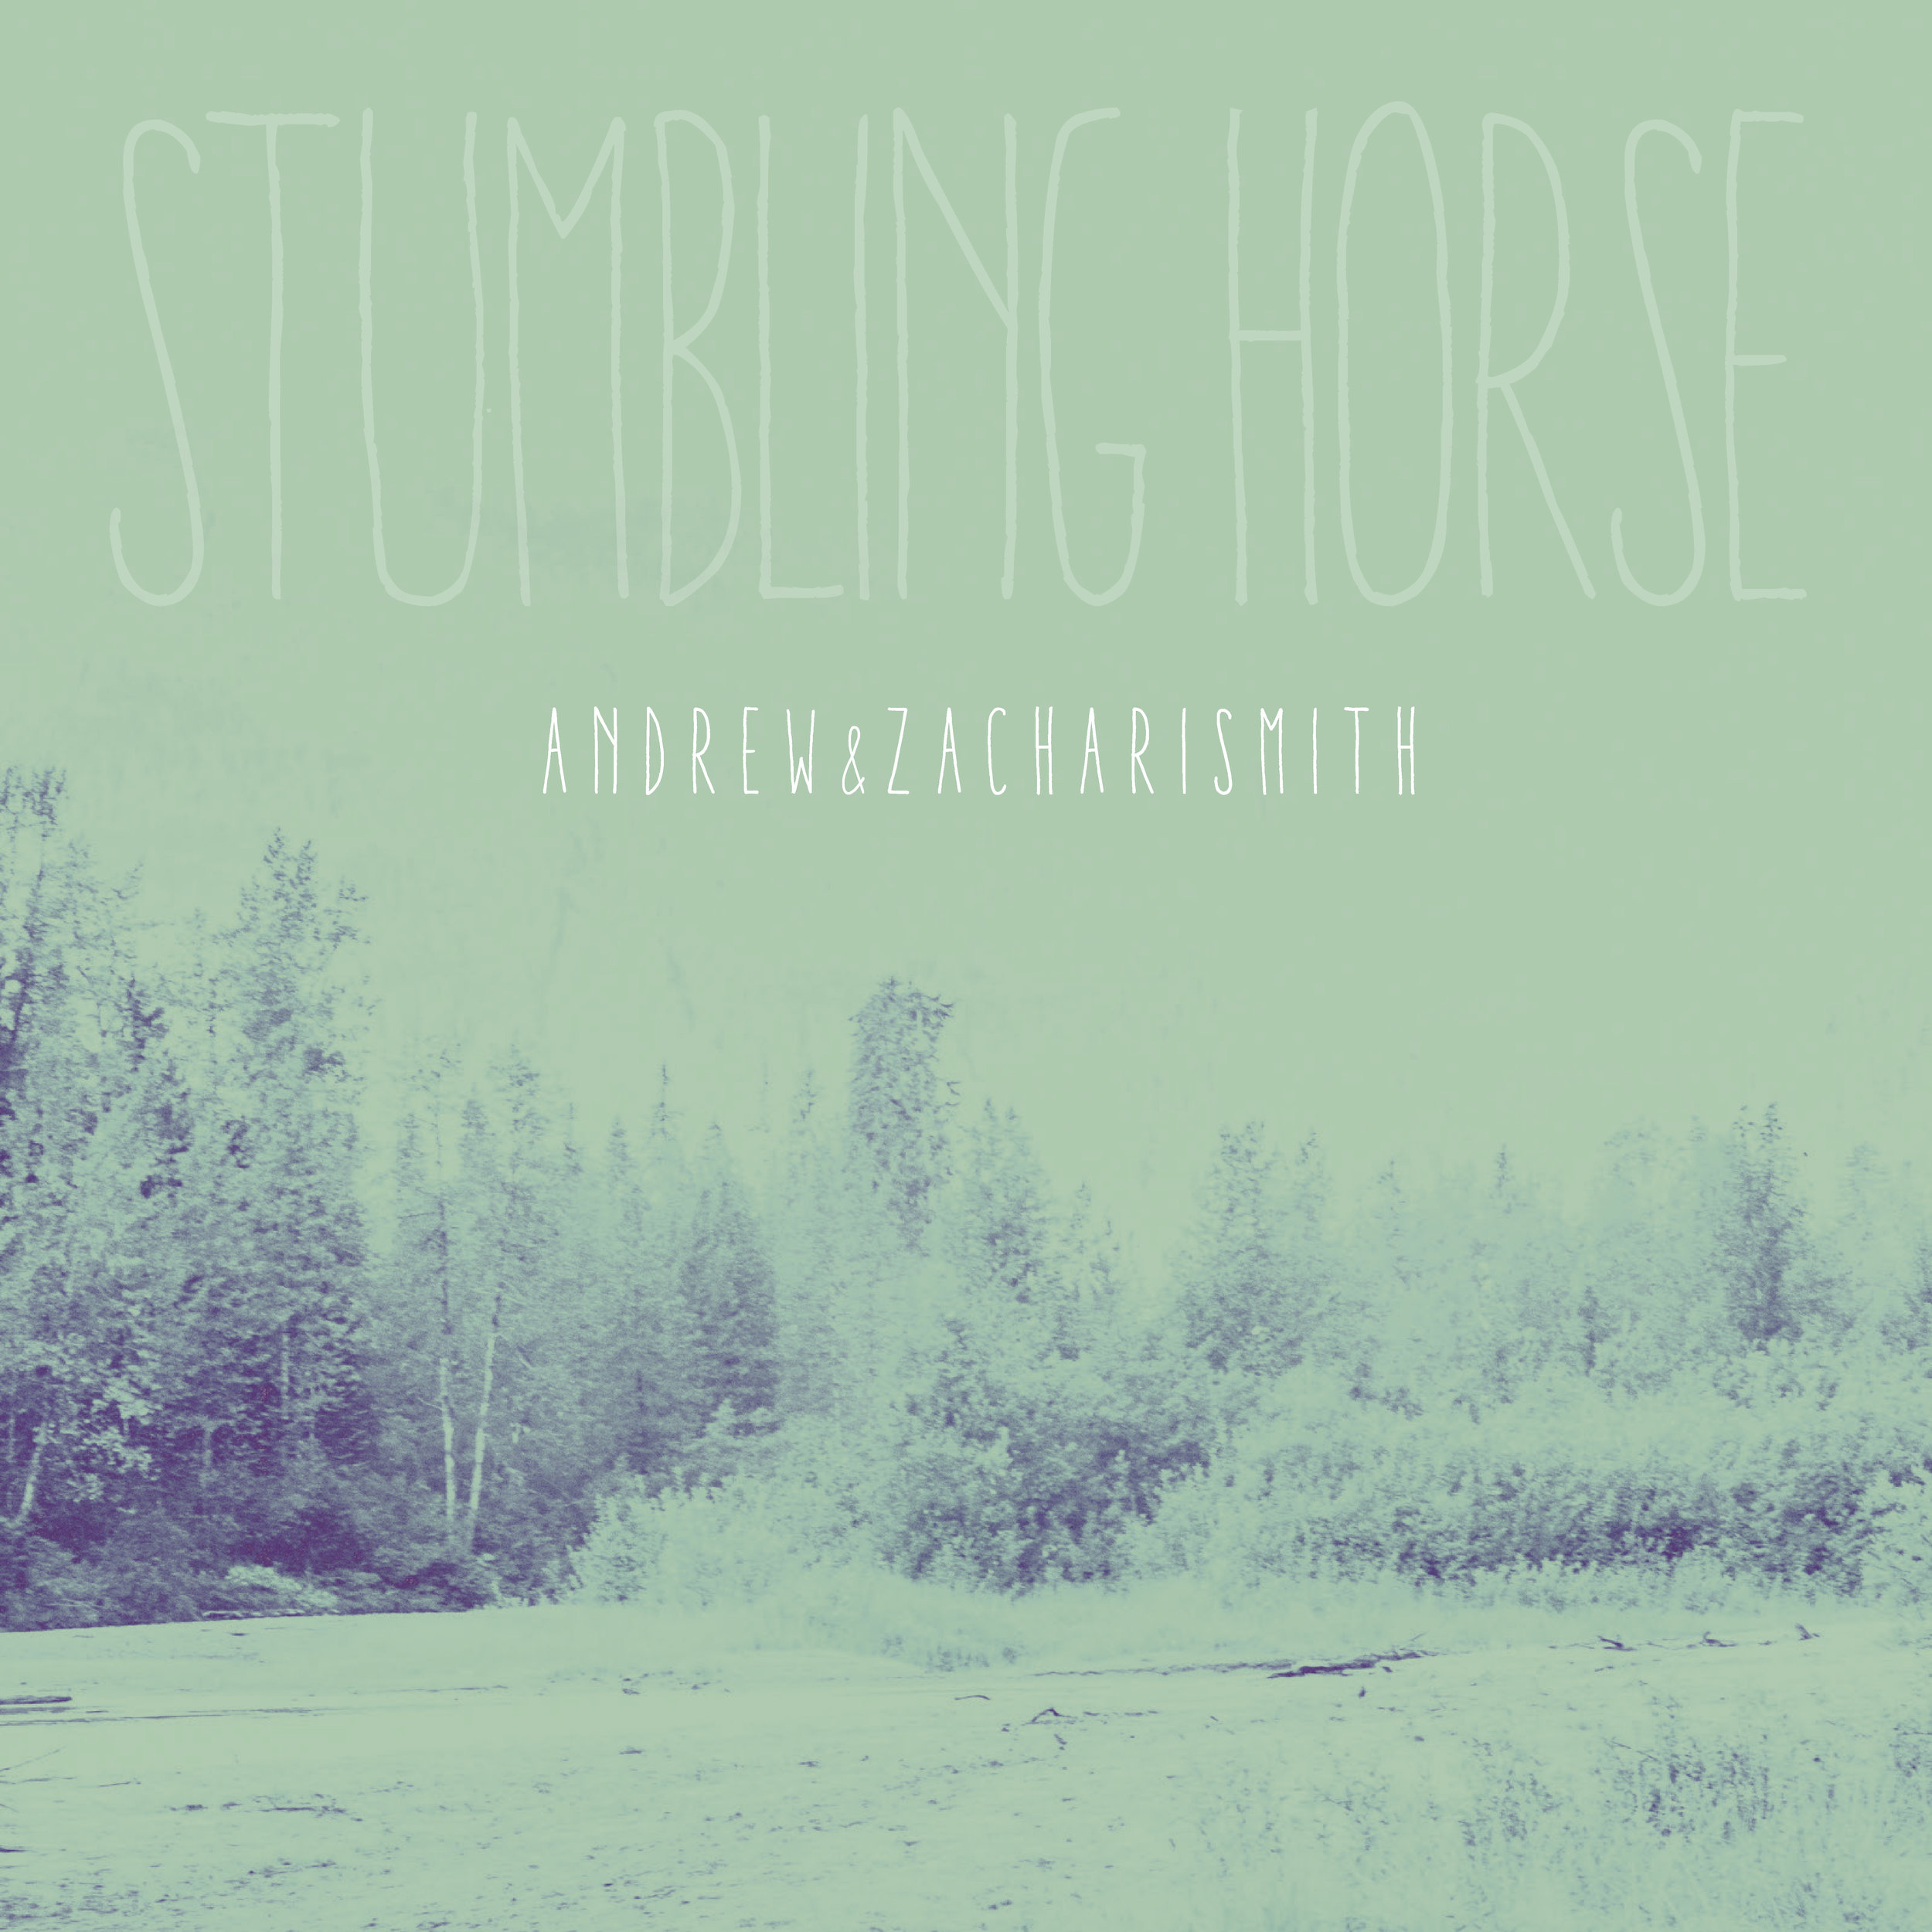 Stumbling Horse Cover (Square Hi Res)-01.jpg